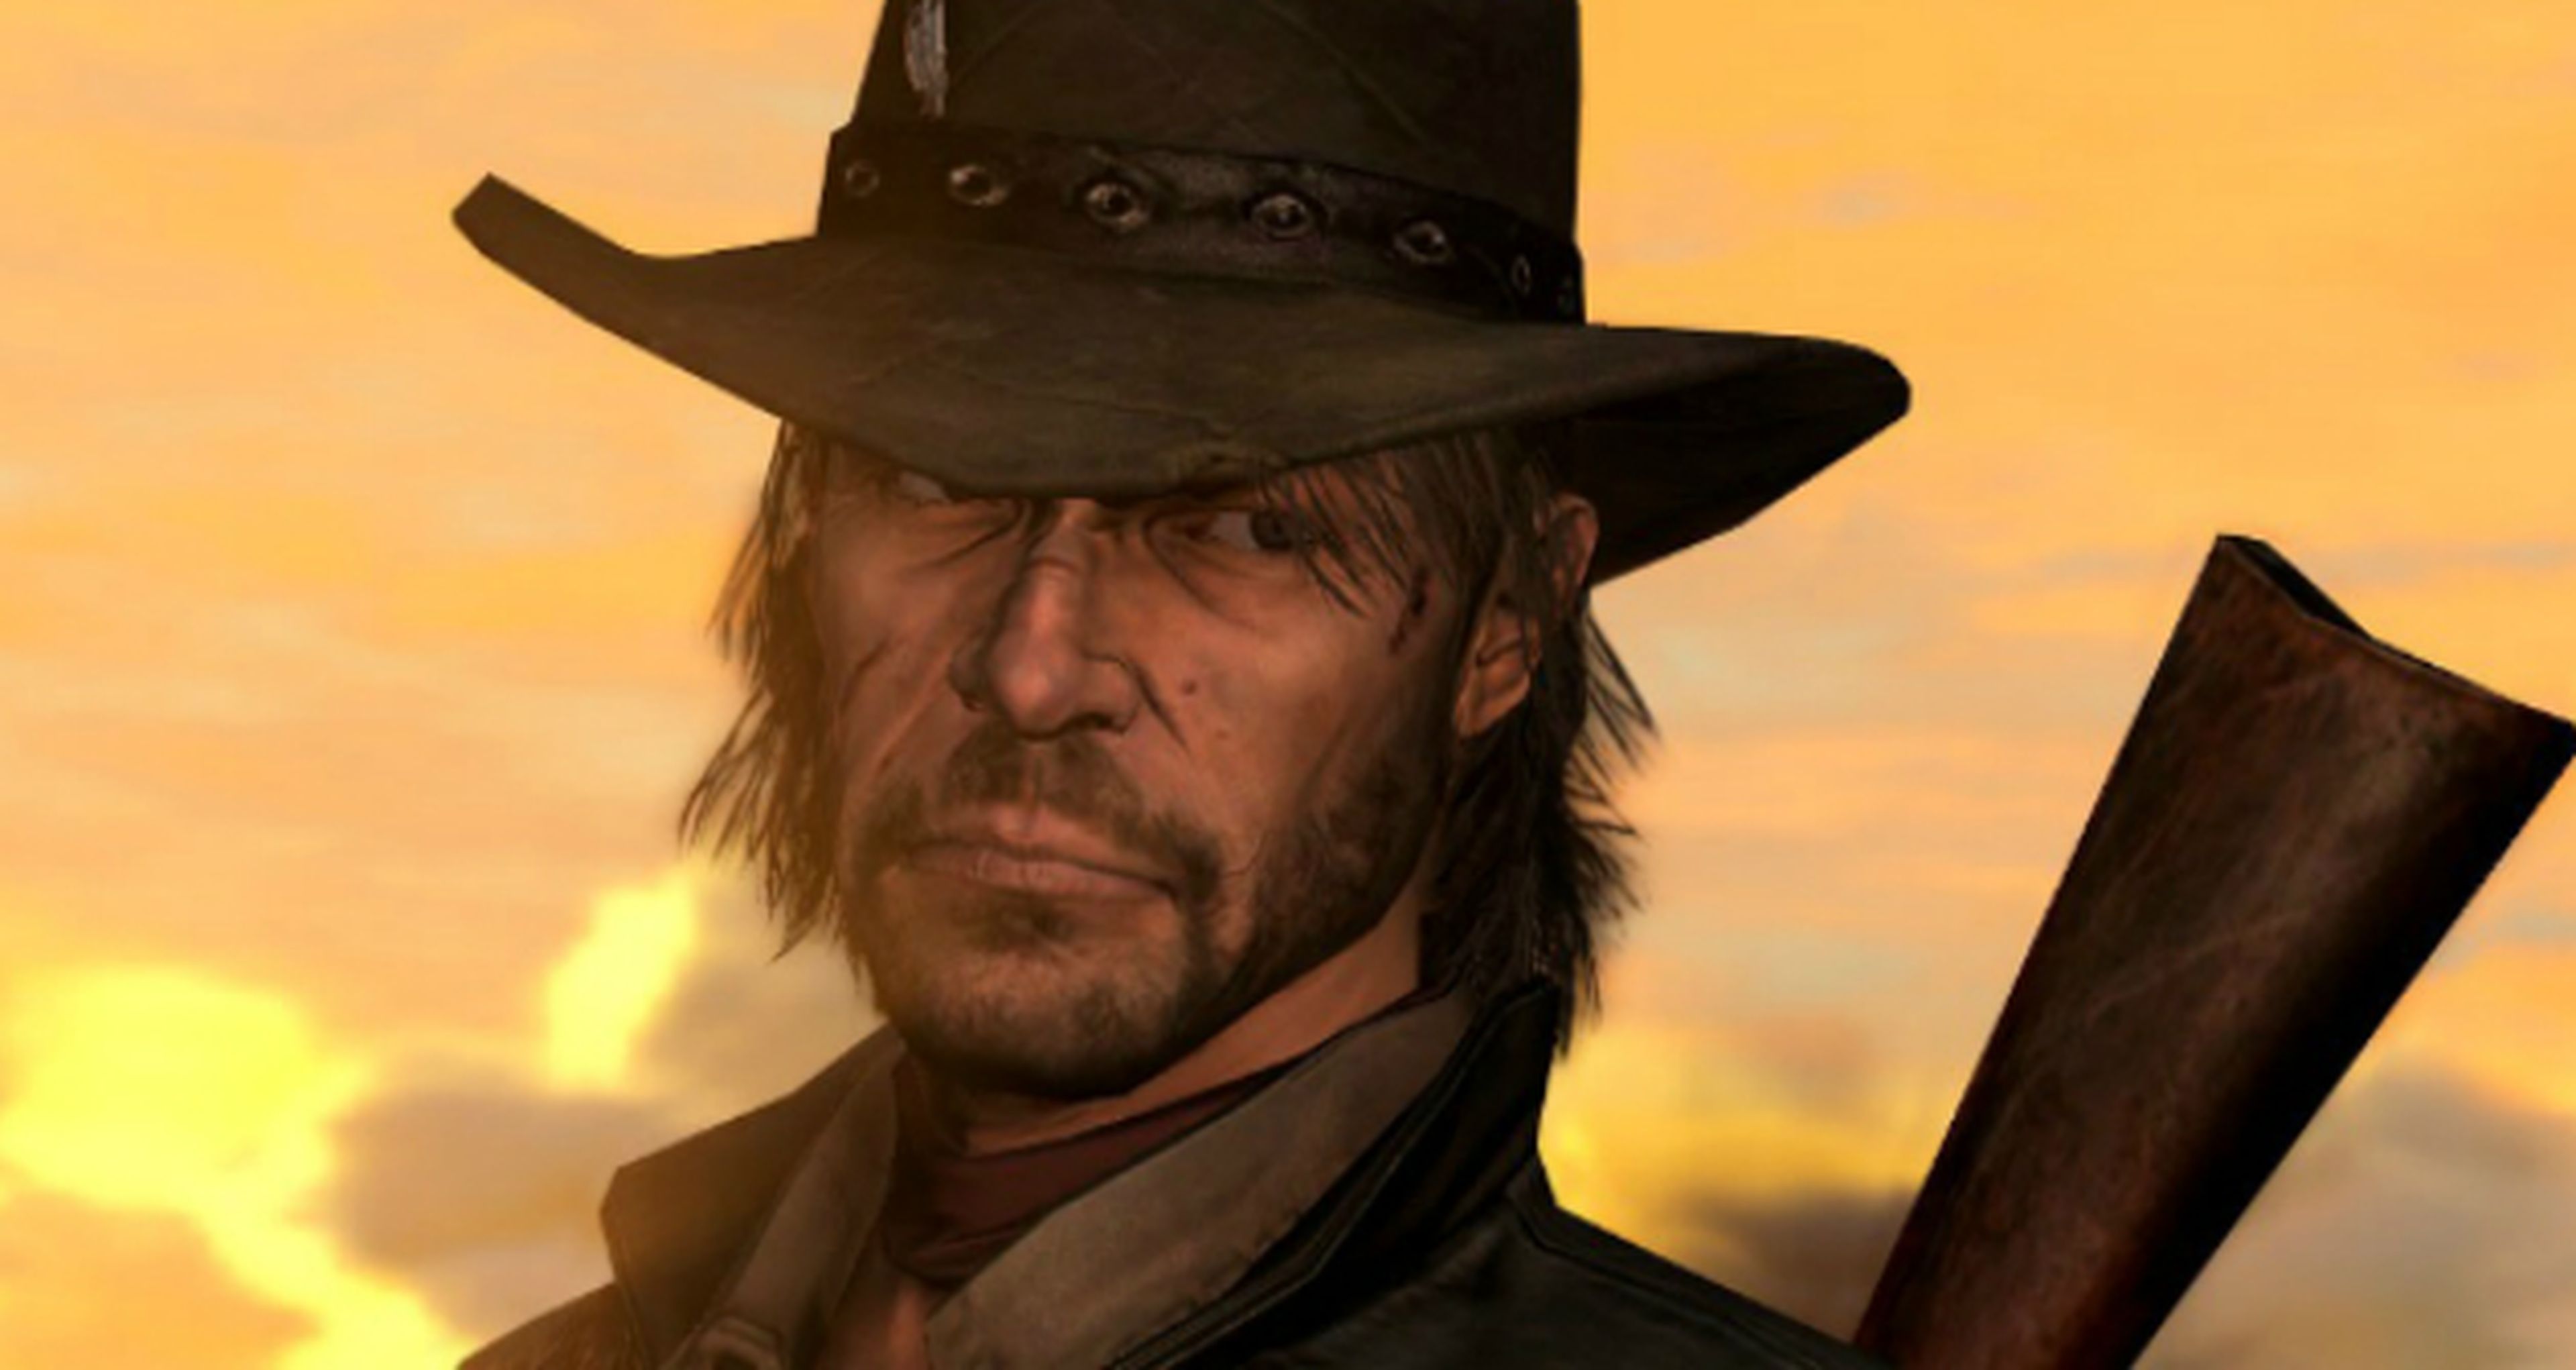 Red Dead Redemption retirado temporalmente de Xbox One